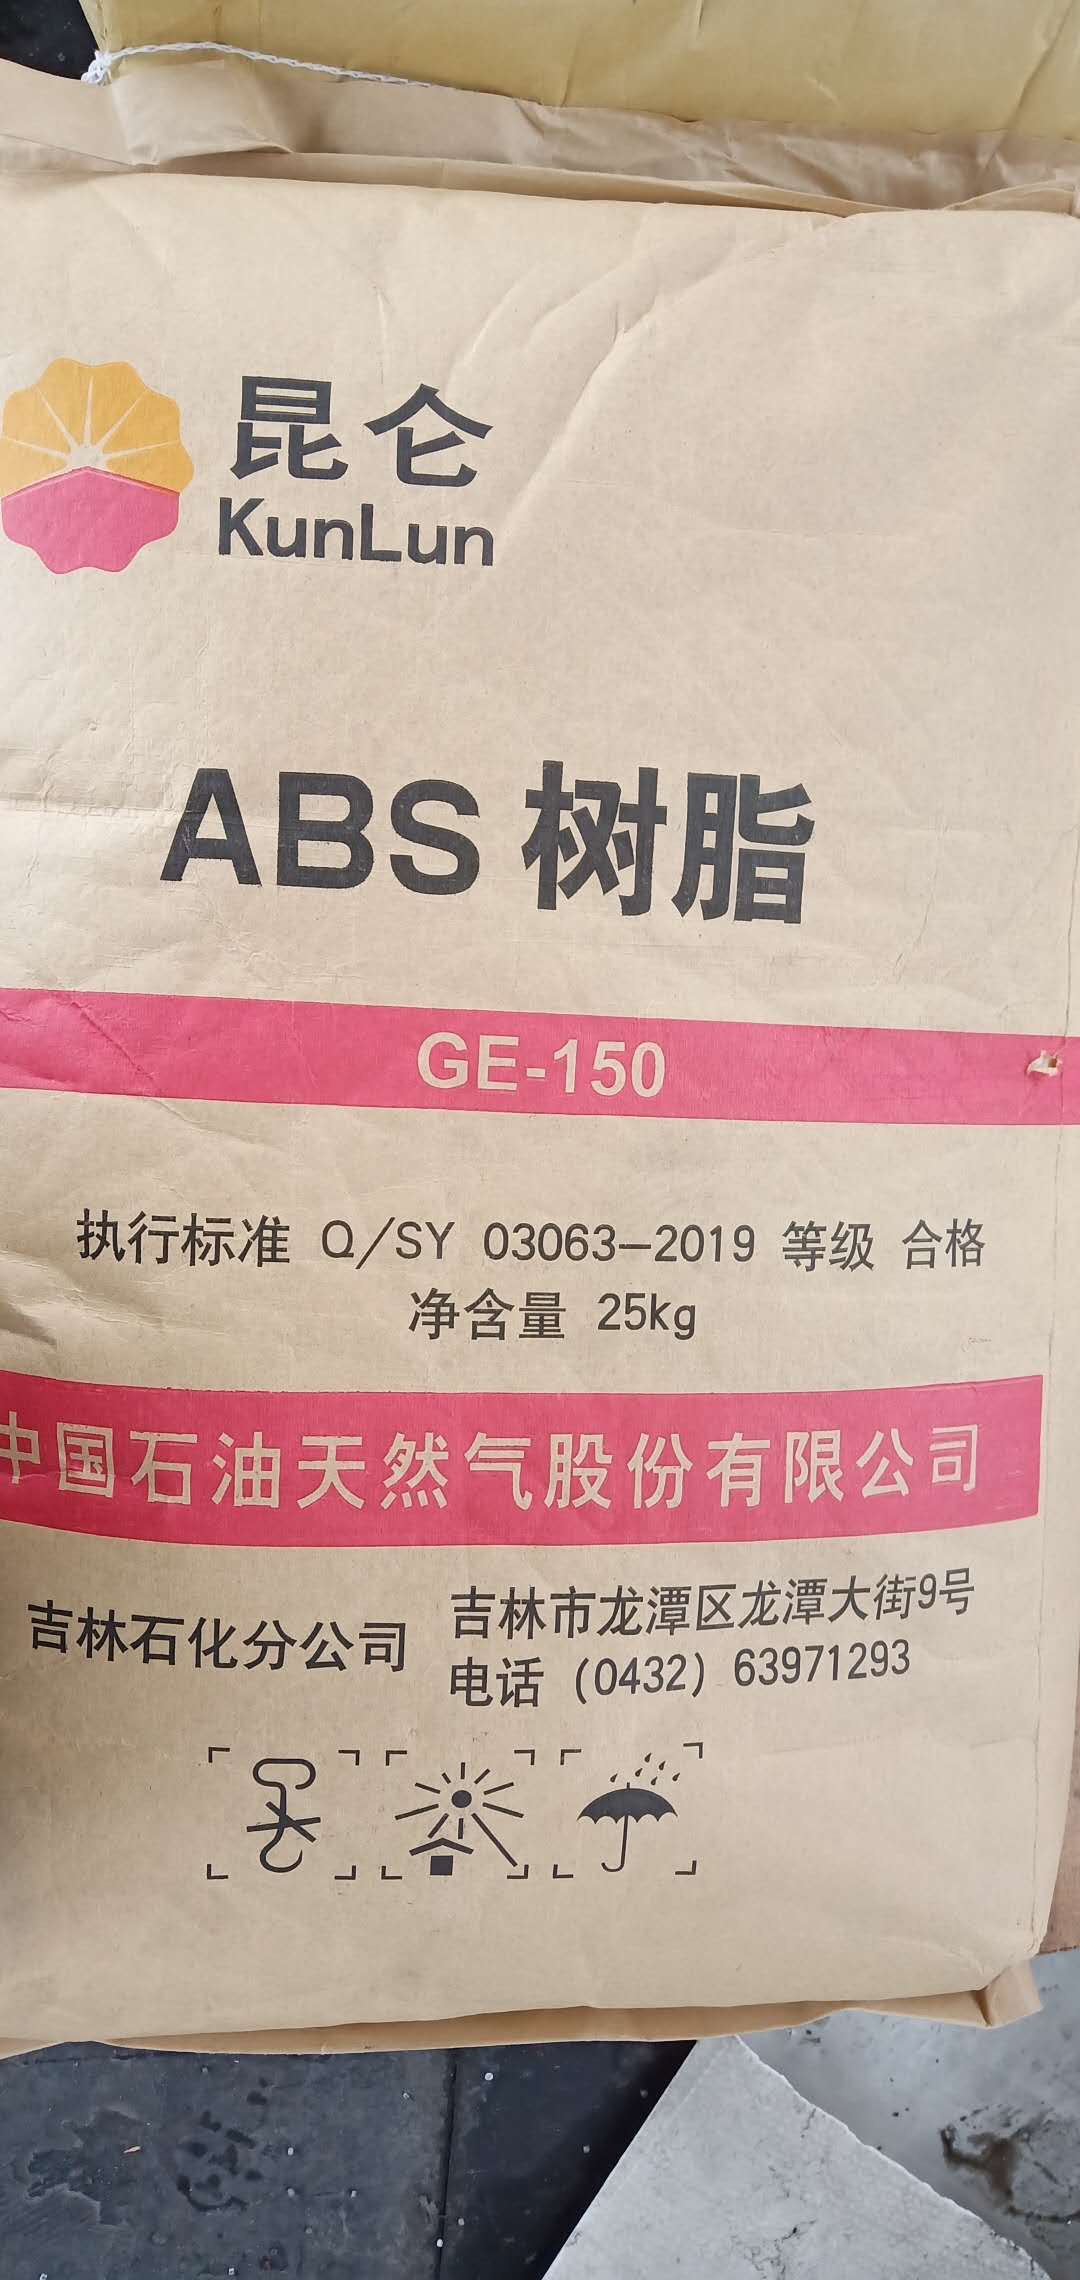 GE-150中石油吉林昆仑ABS树脂20217B-5图